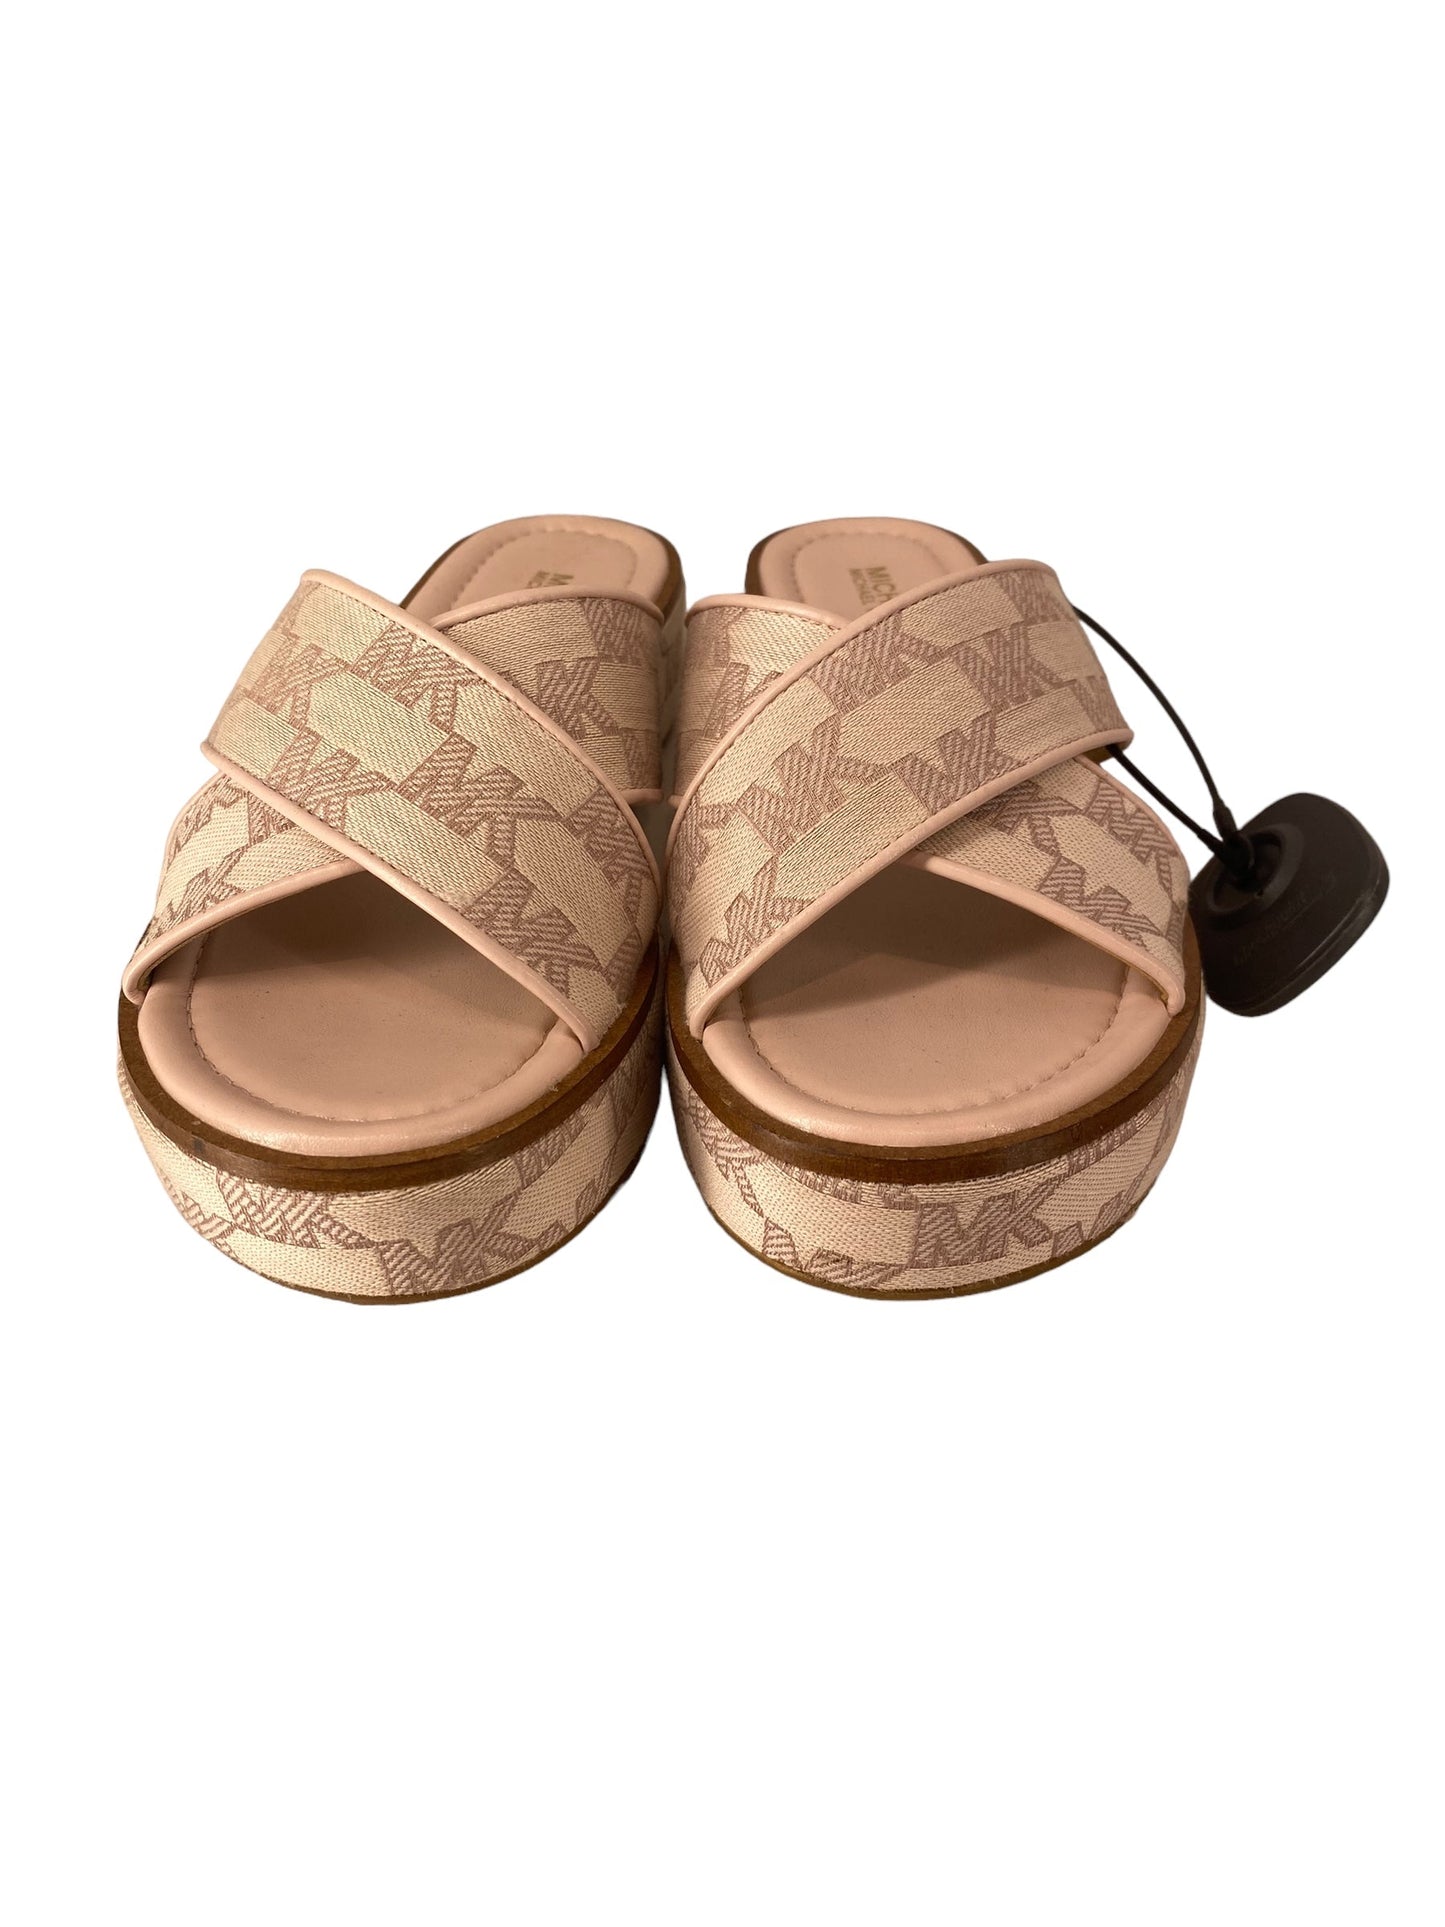 Pink Sandals Heels Platform Michael By Michael Kors, Size 6.5